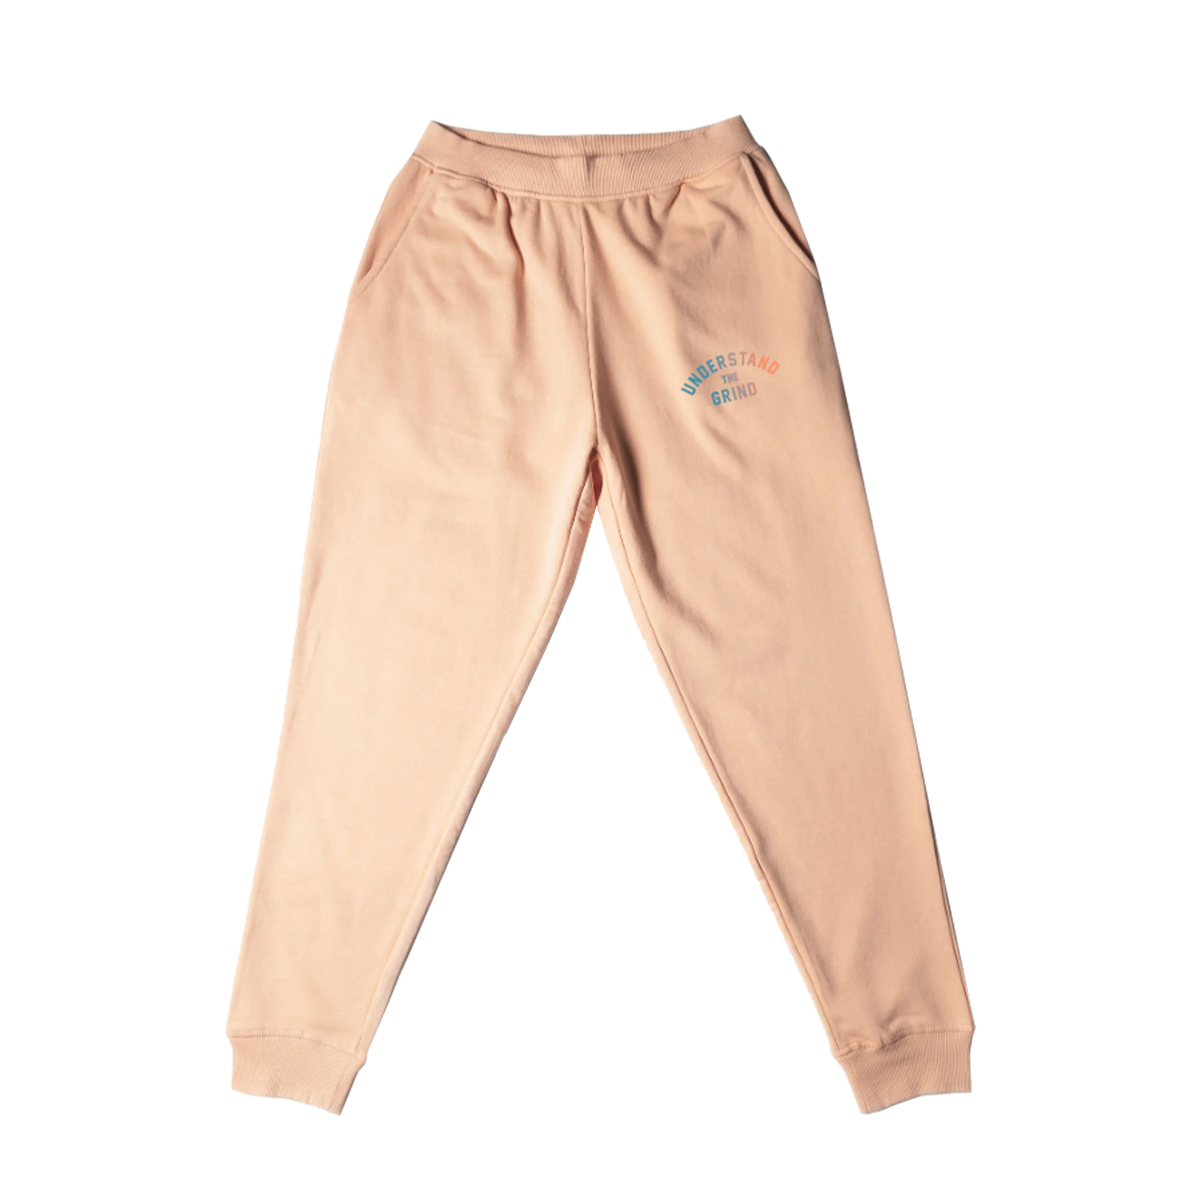 Peach jogger pants